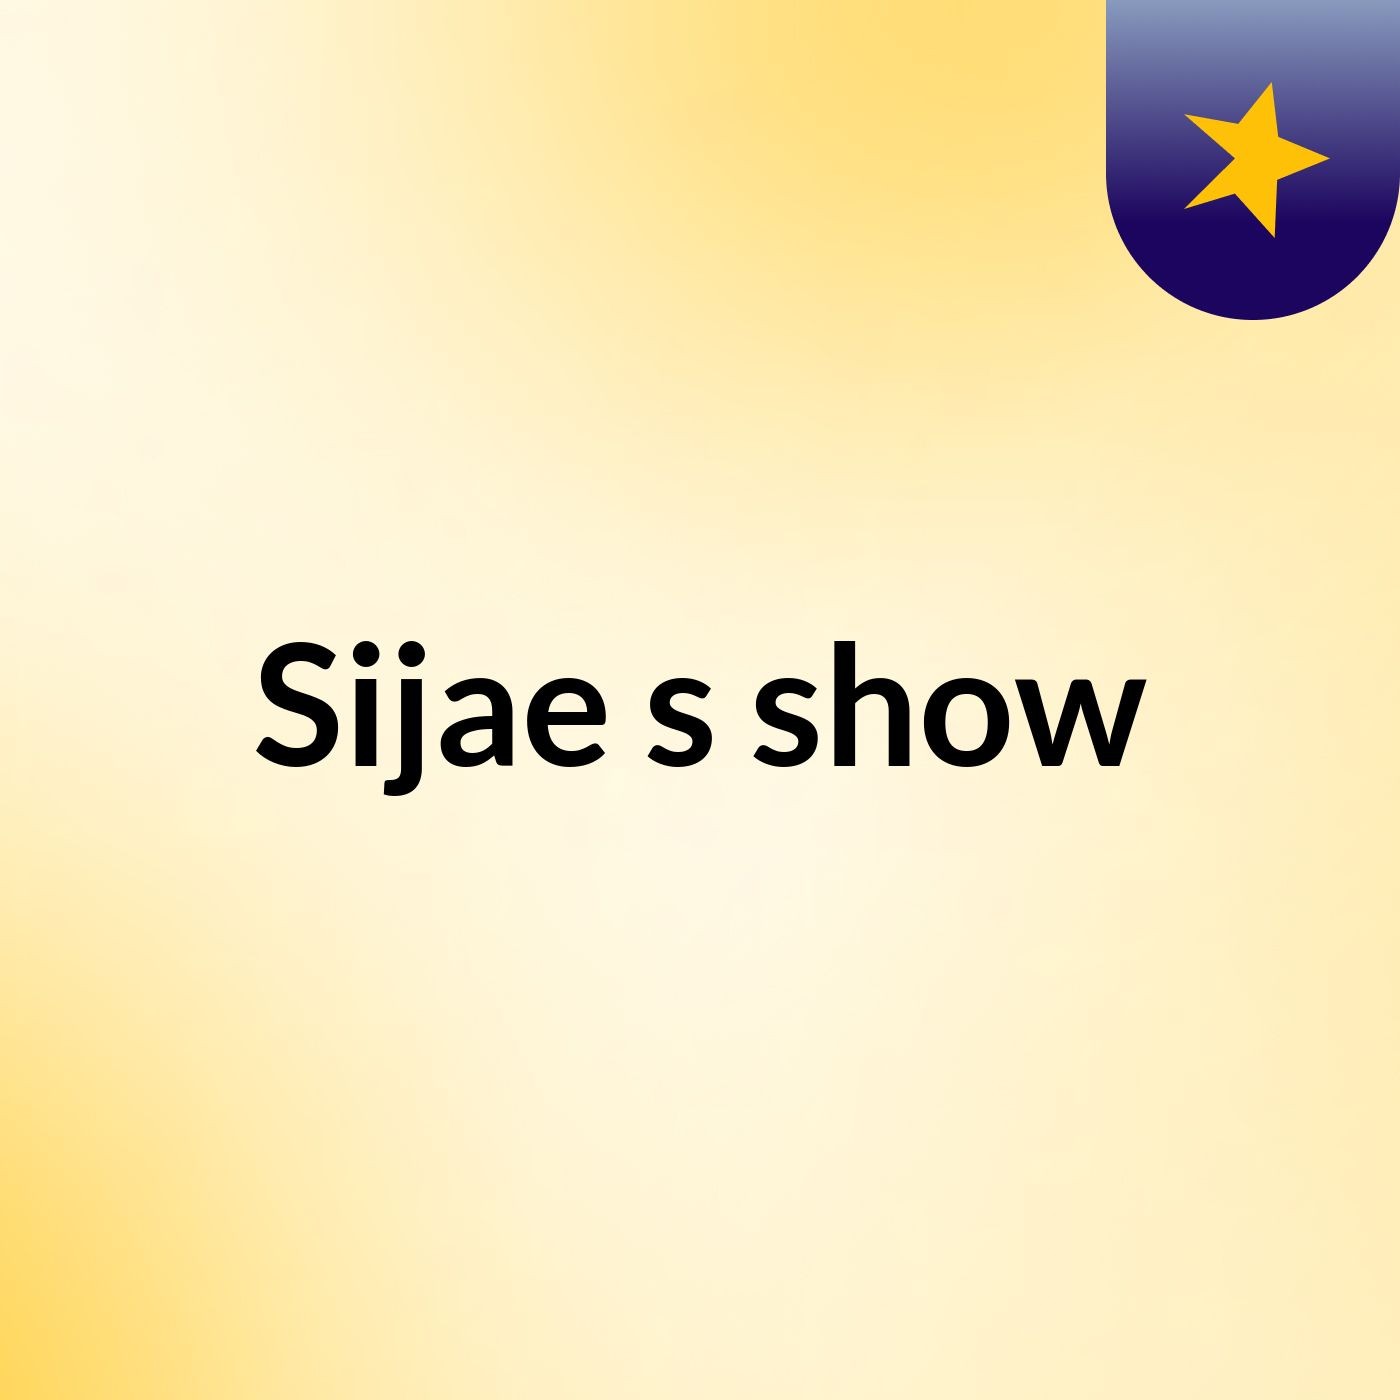 Sijae's show